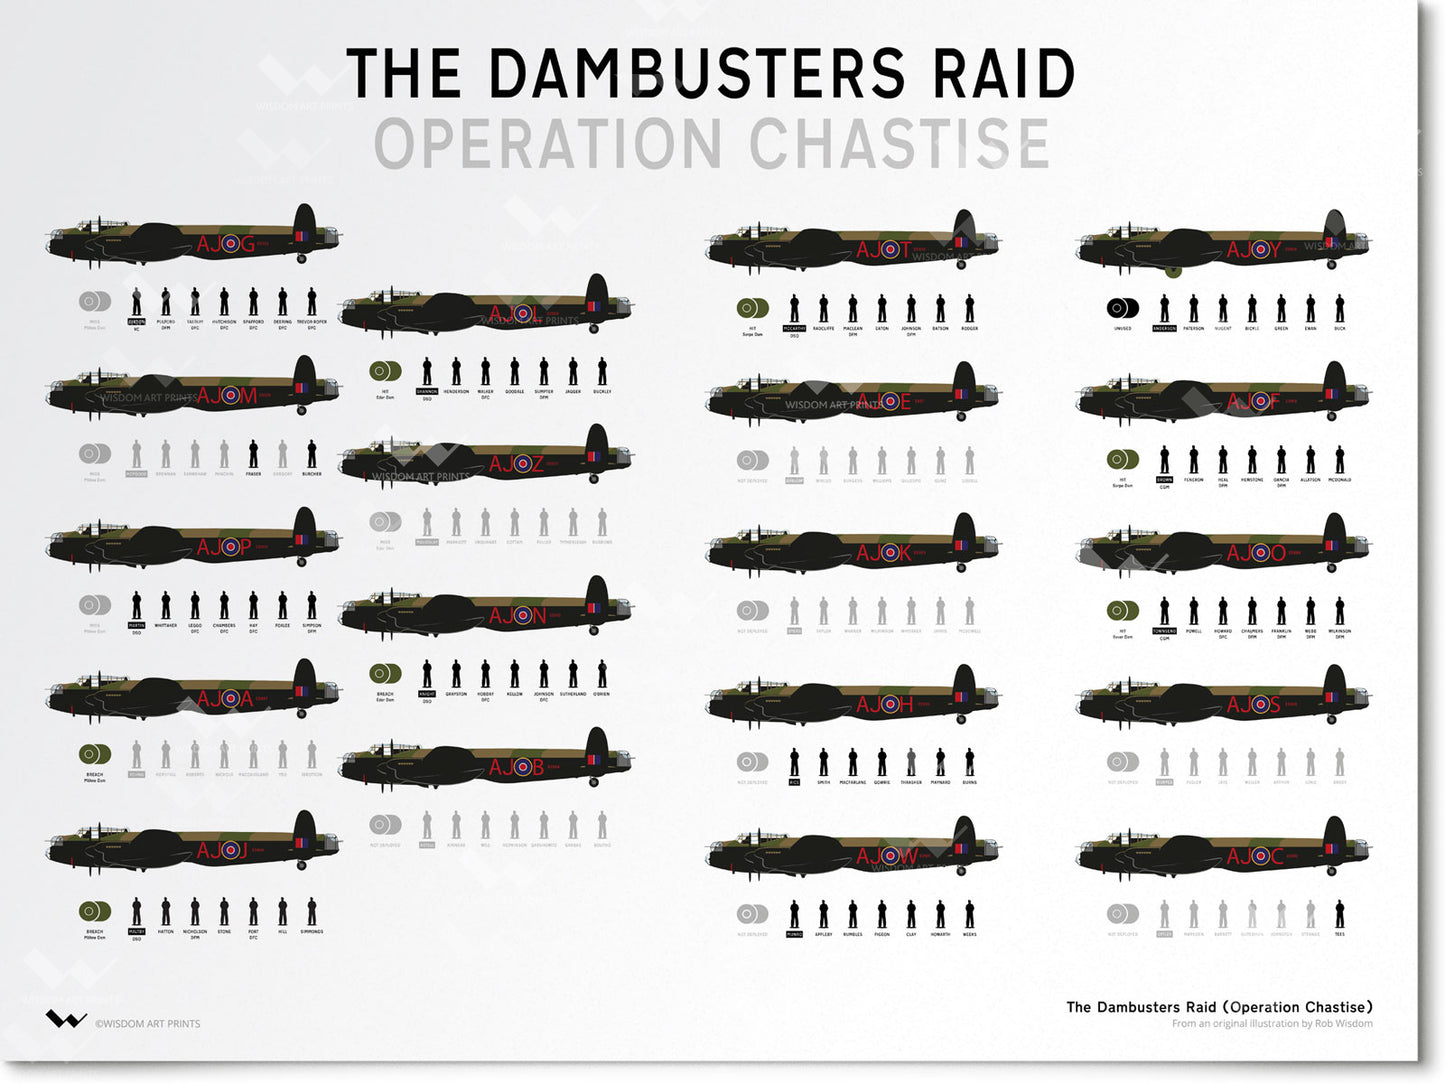 The Dambusters Raid